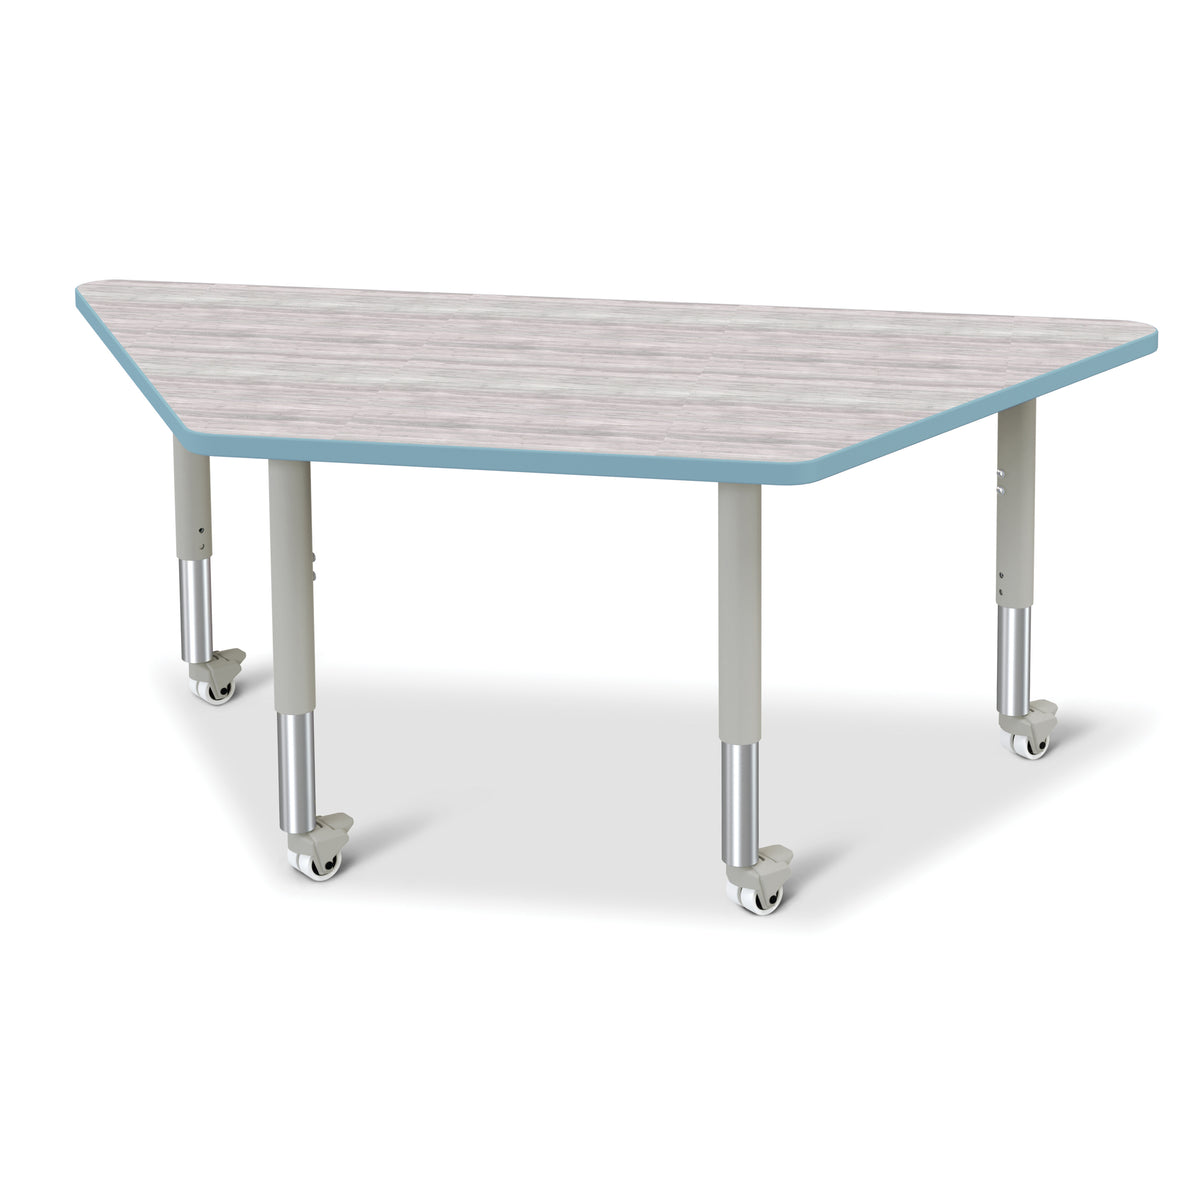 6443JCM452, Berries Trapezoid Activity Table - 30" X 60", Mobile - Driftwood Gray/Coastal Blue/Gray